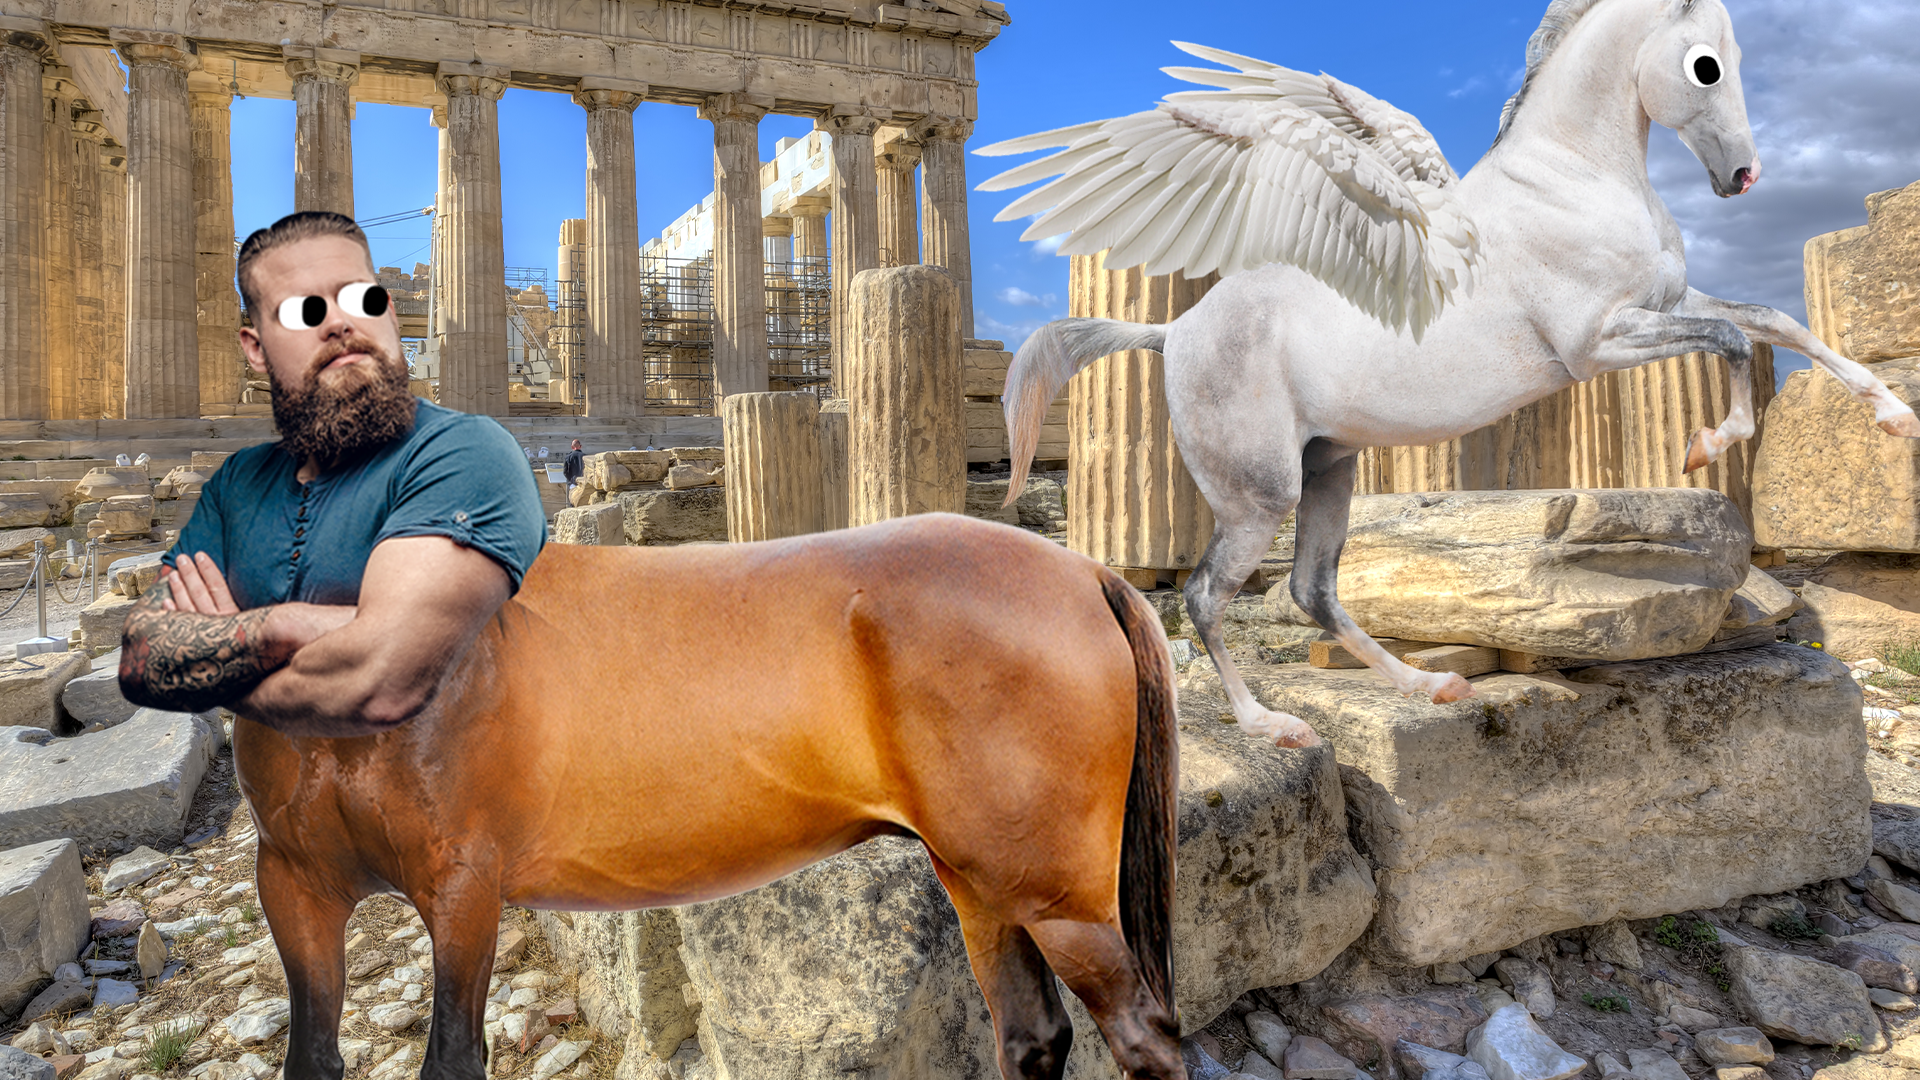 Centaur looking at Pegasus in some ruins